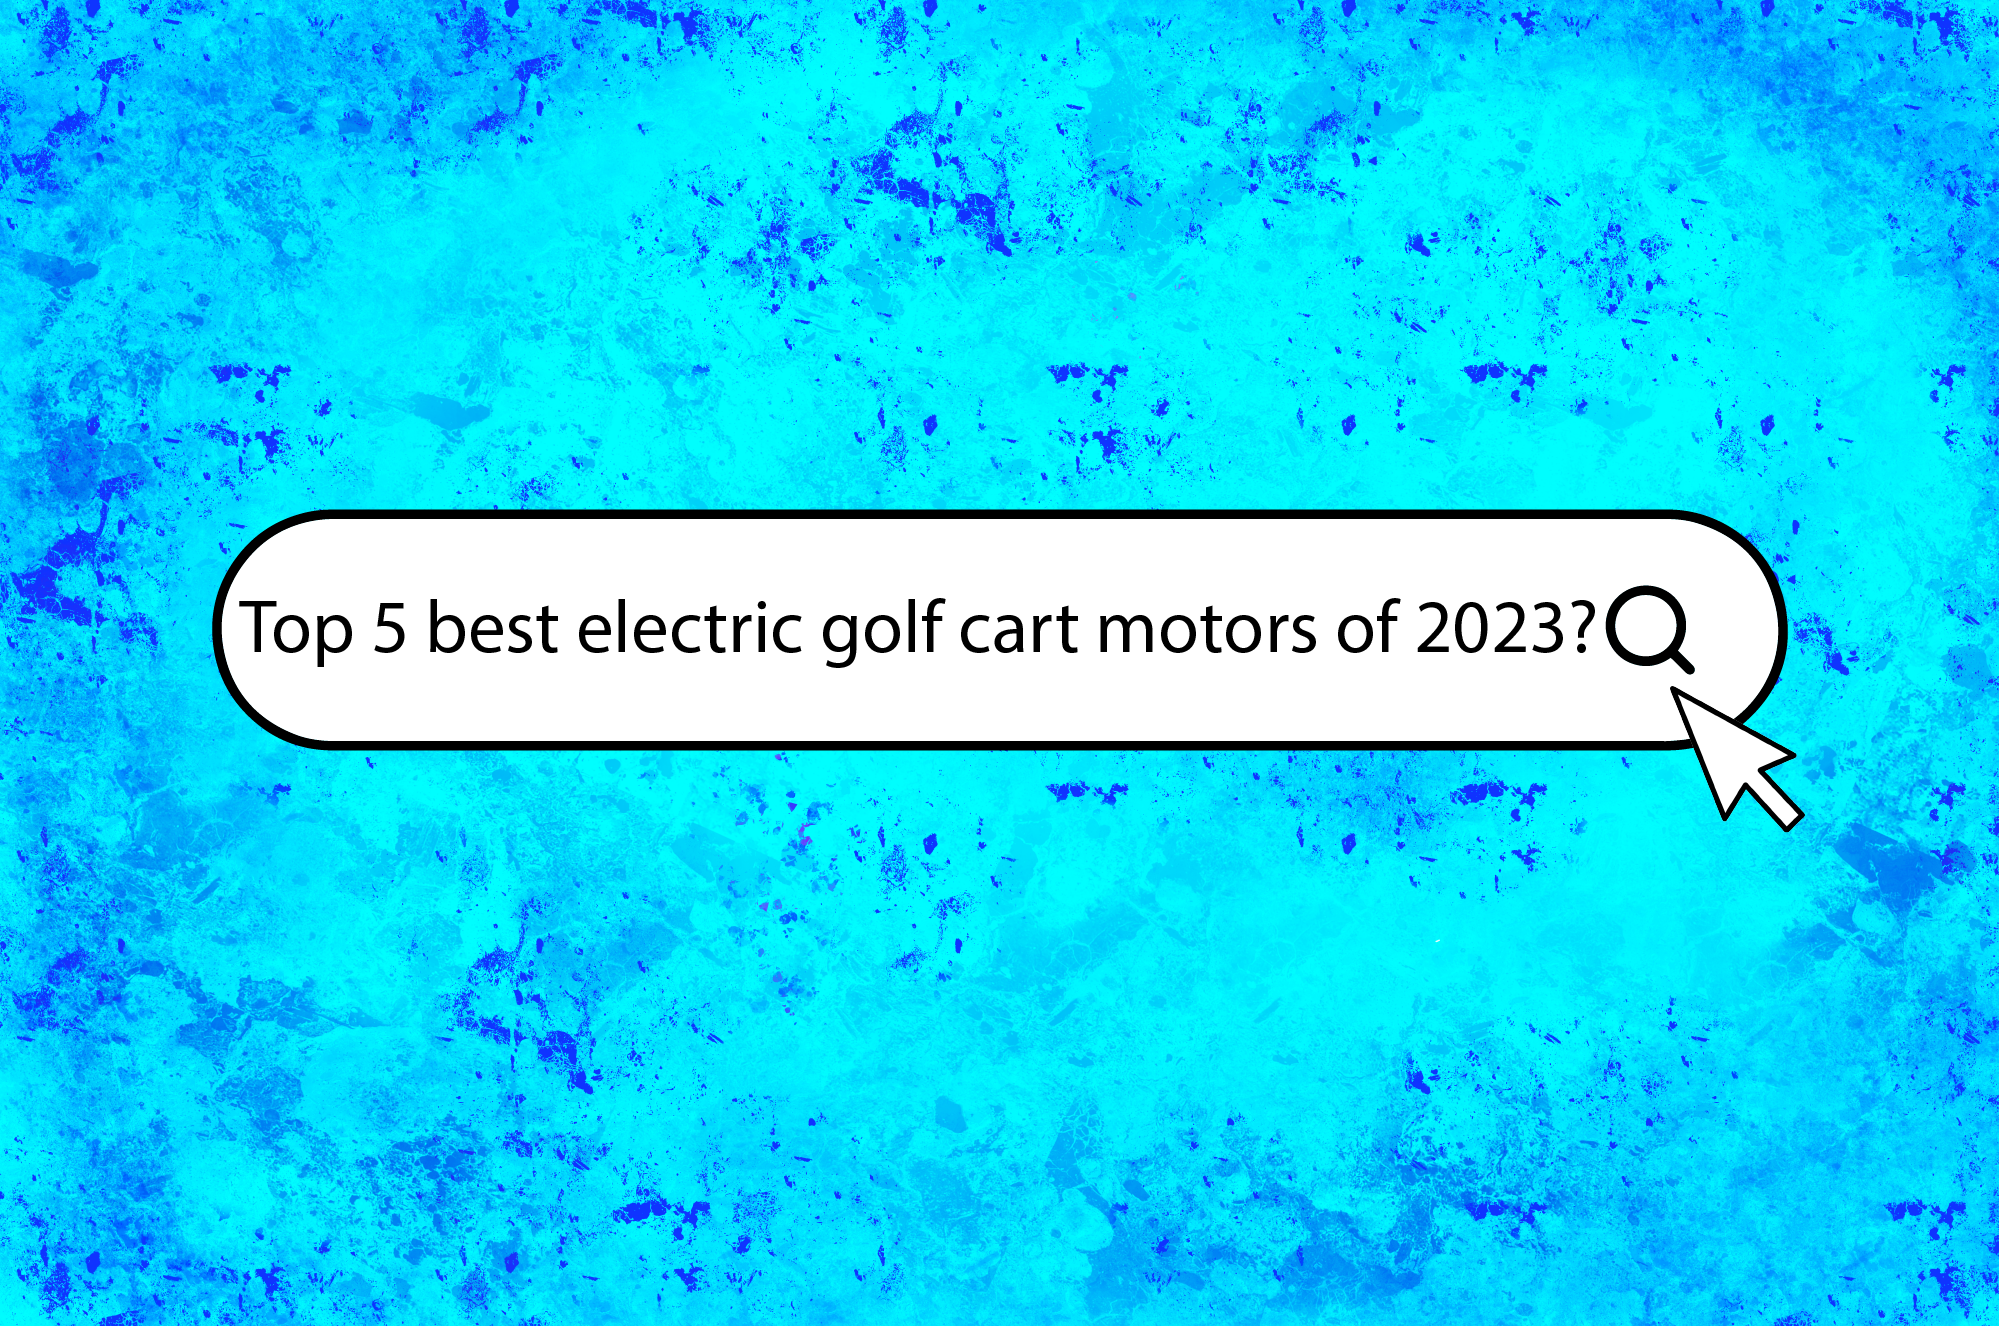 Top 5 electric golf cart motors of 2023